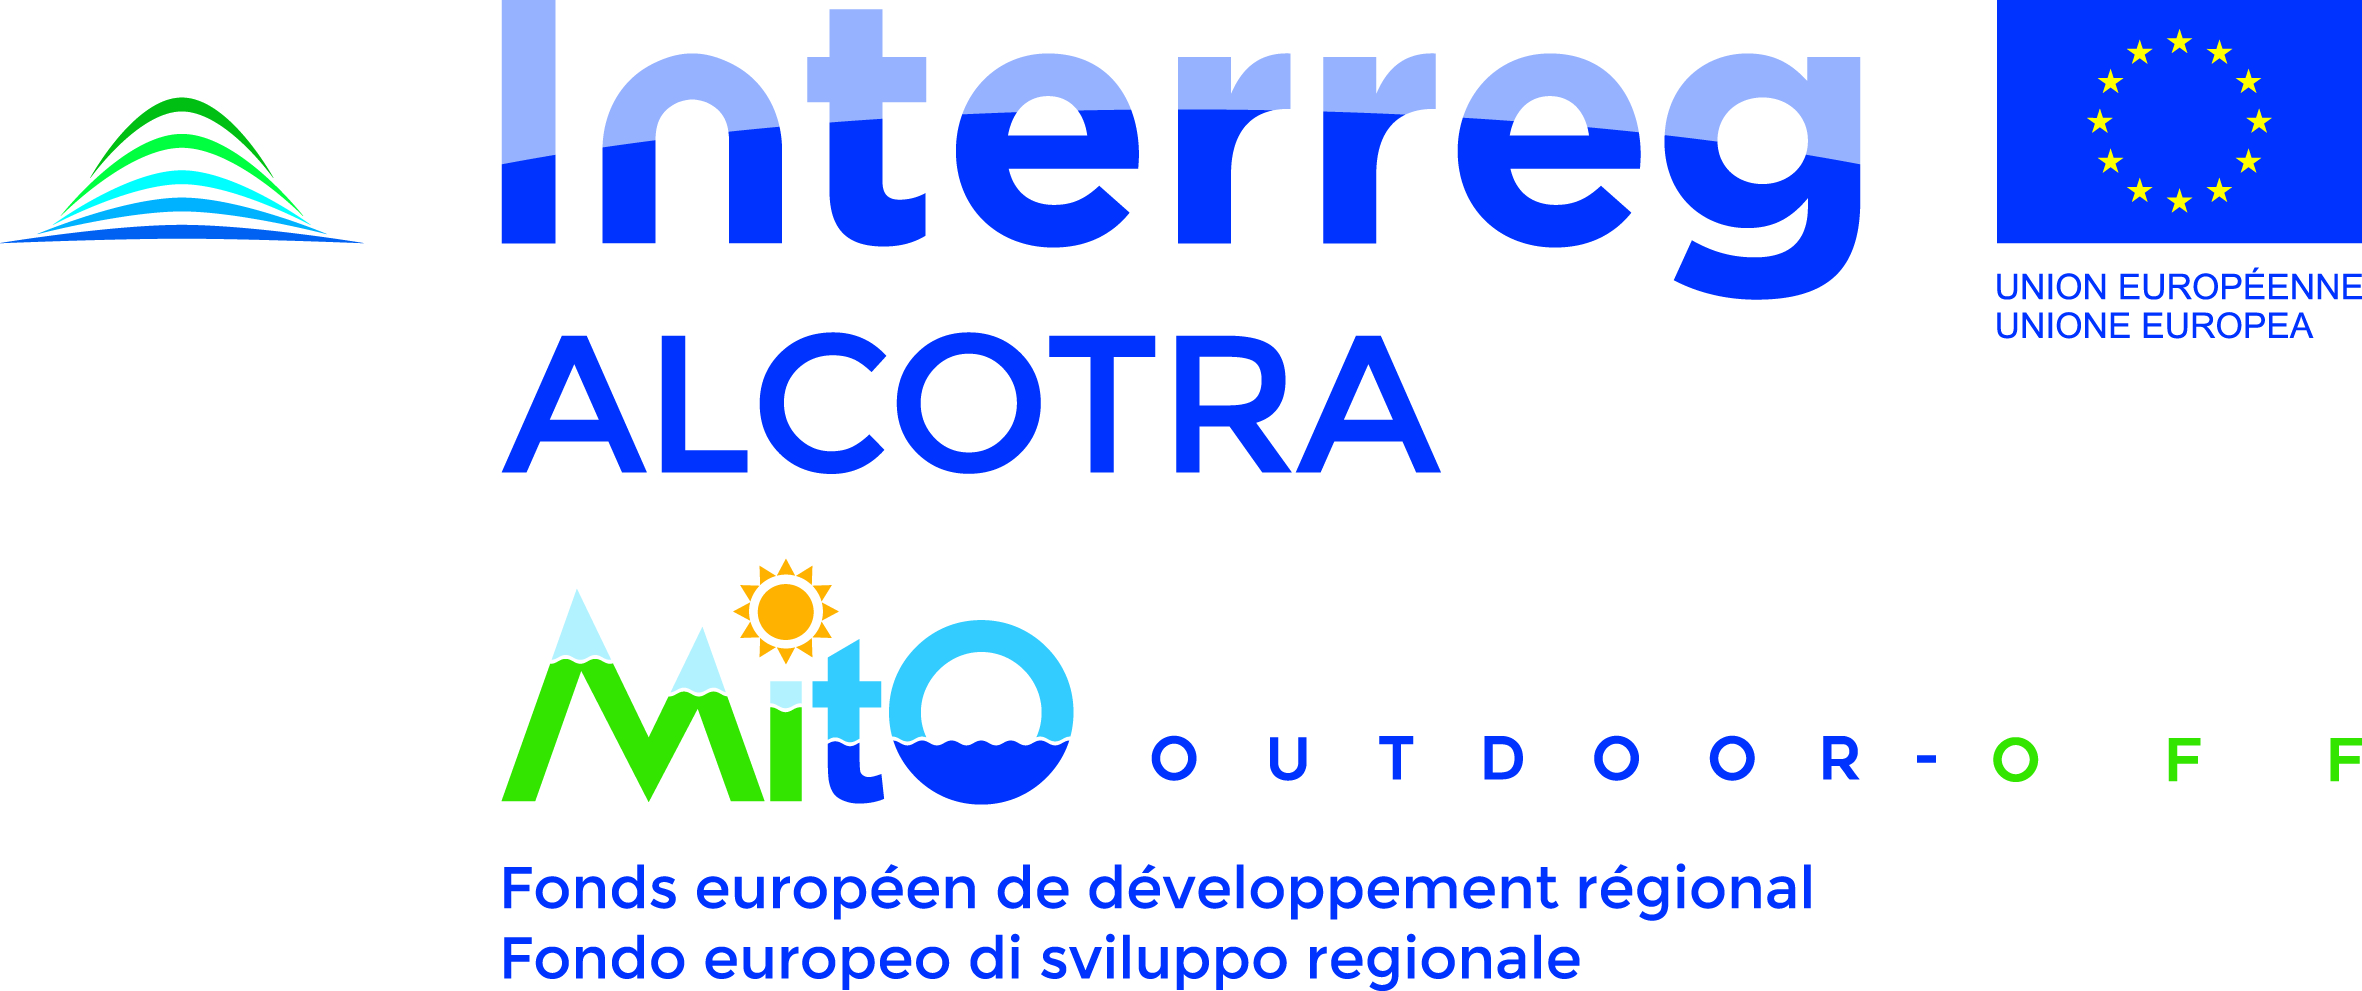 outdoor OFF logo